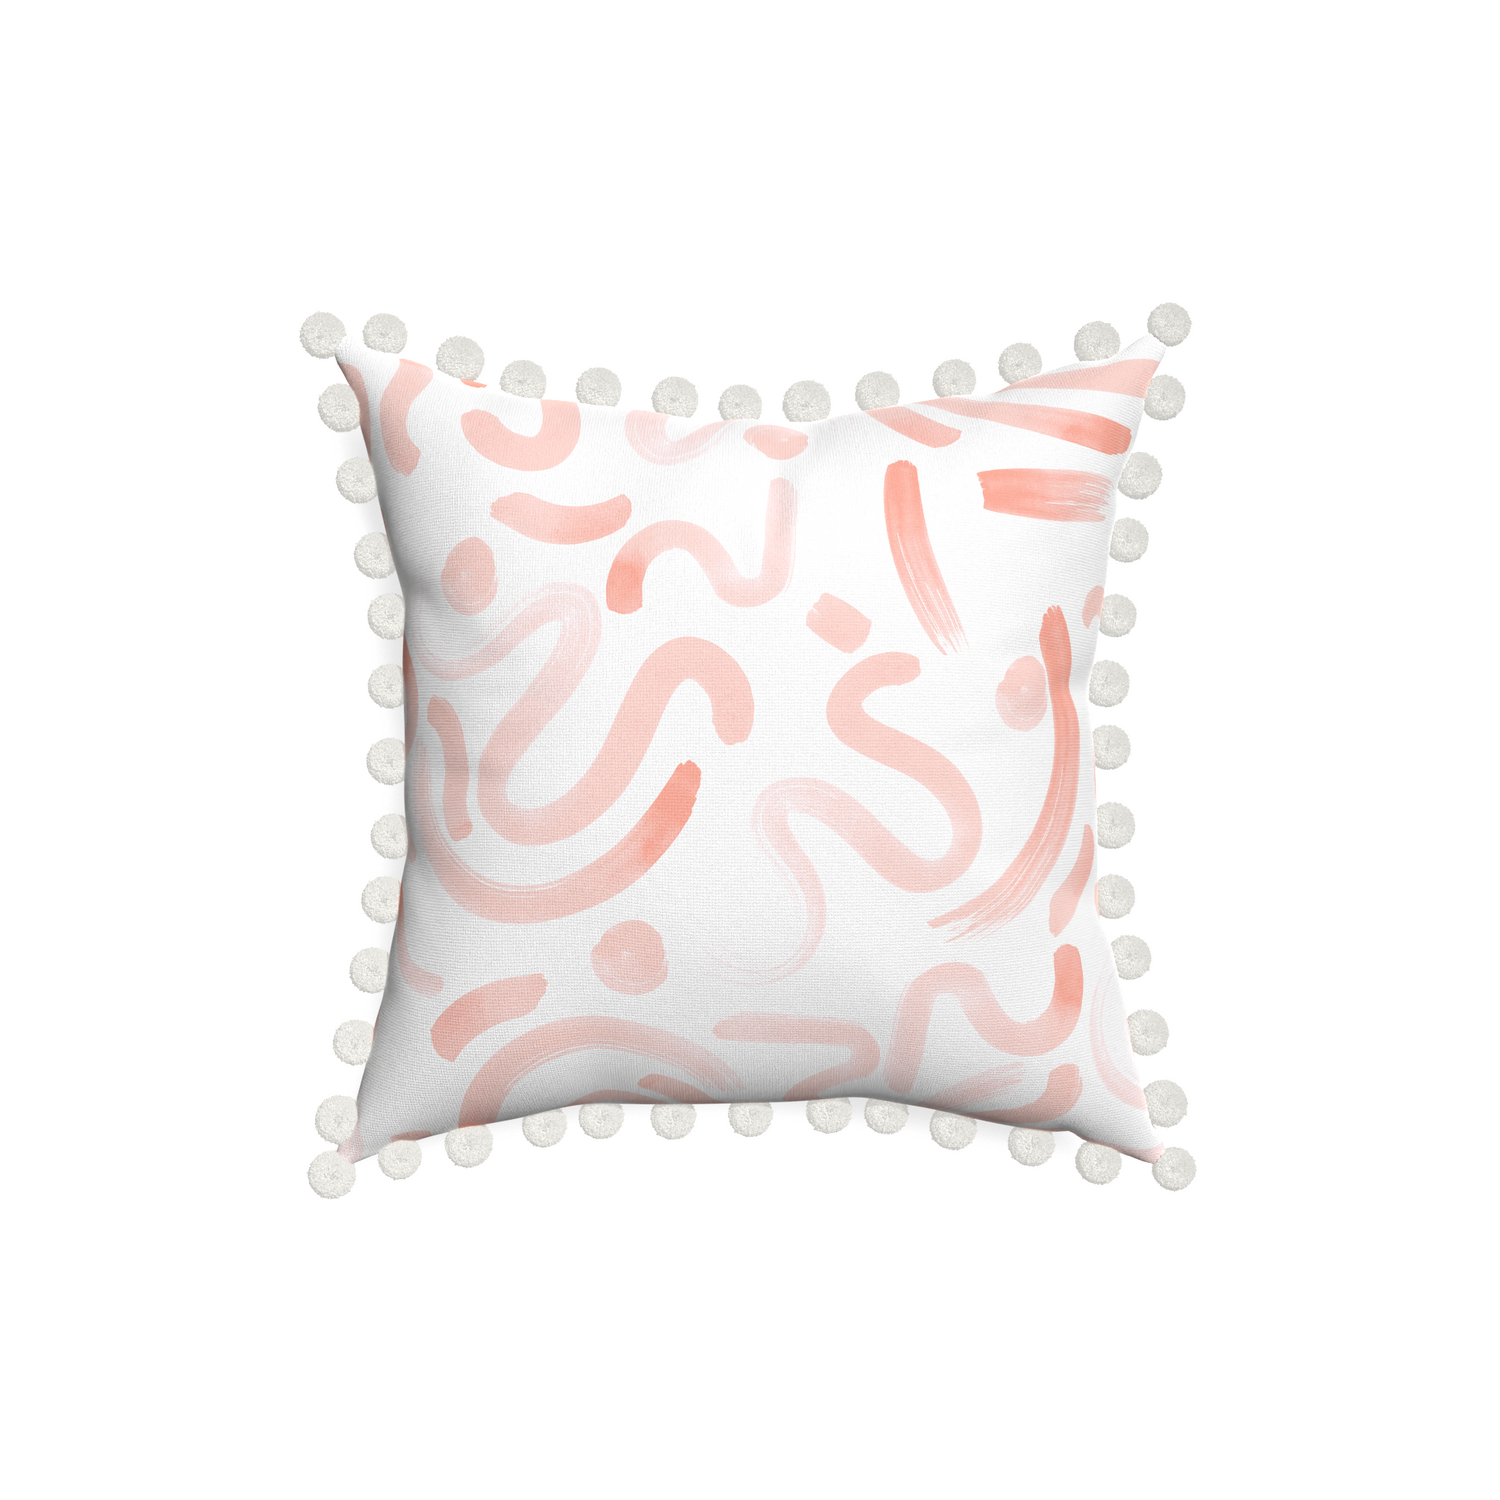 18-square hockney pink custom pillow with snow pom pom on white background